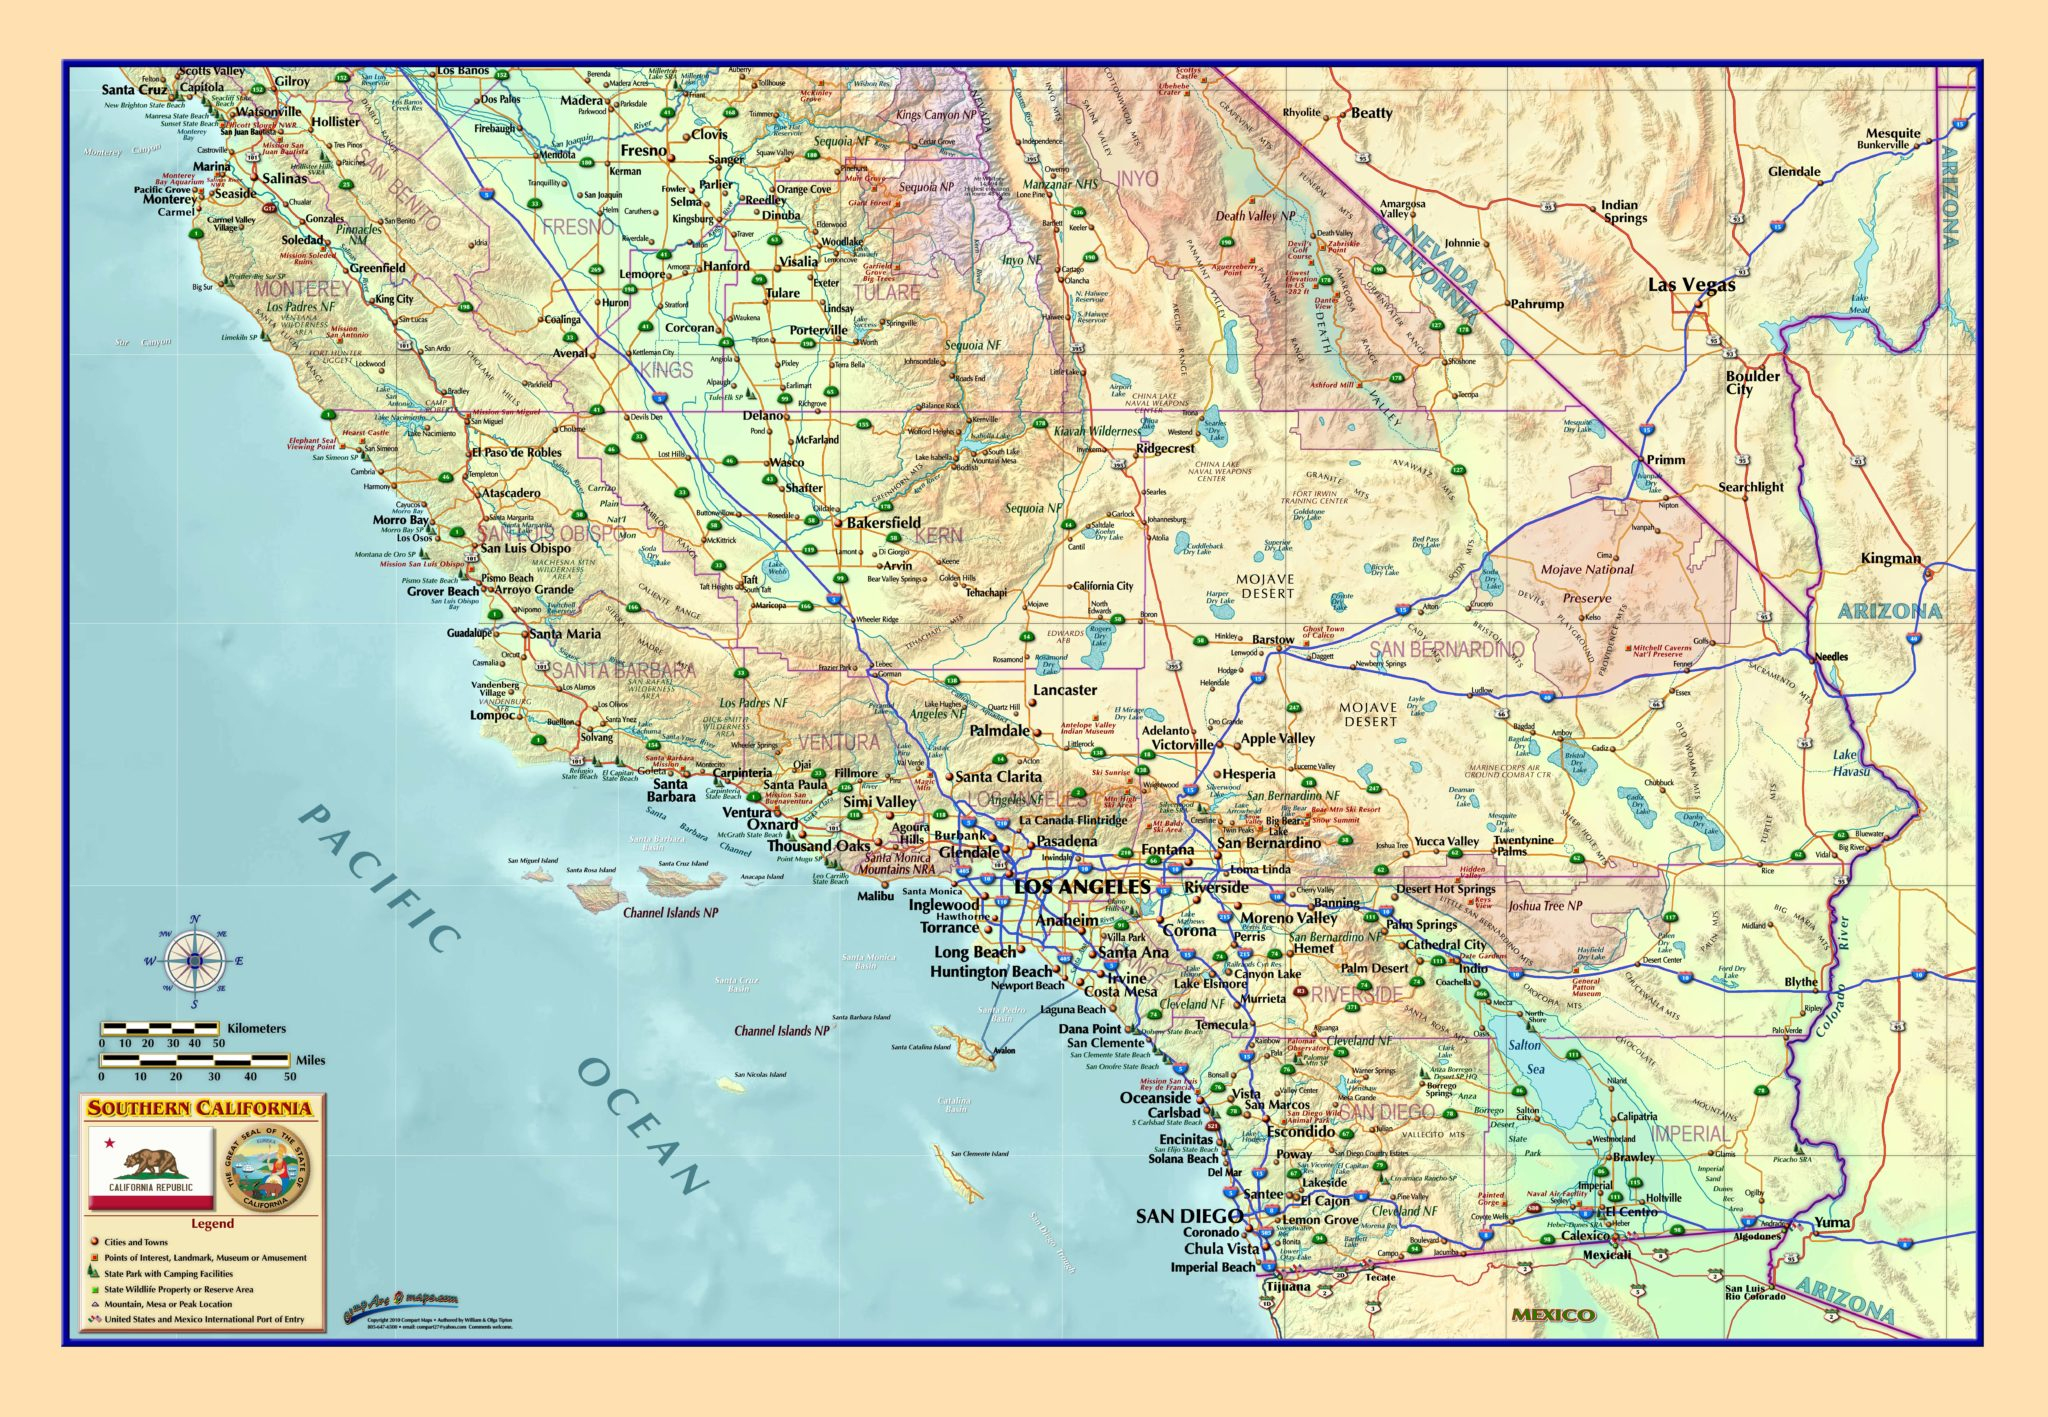 Southern California Wall Map - The Map Shop - California Wall Map